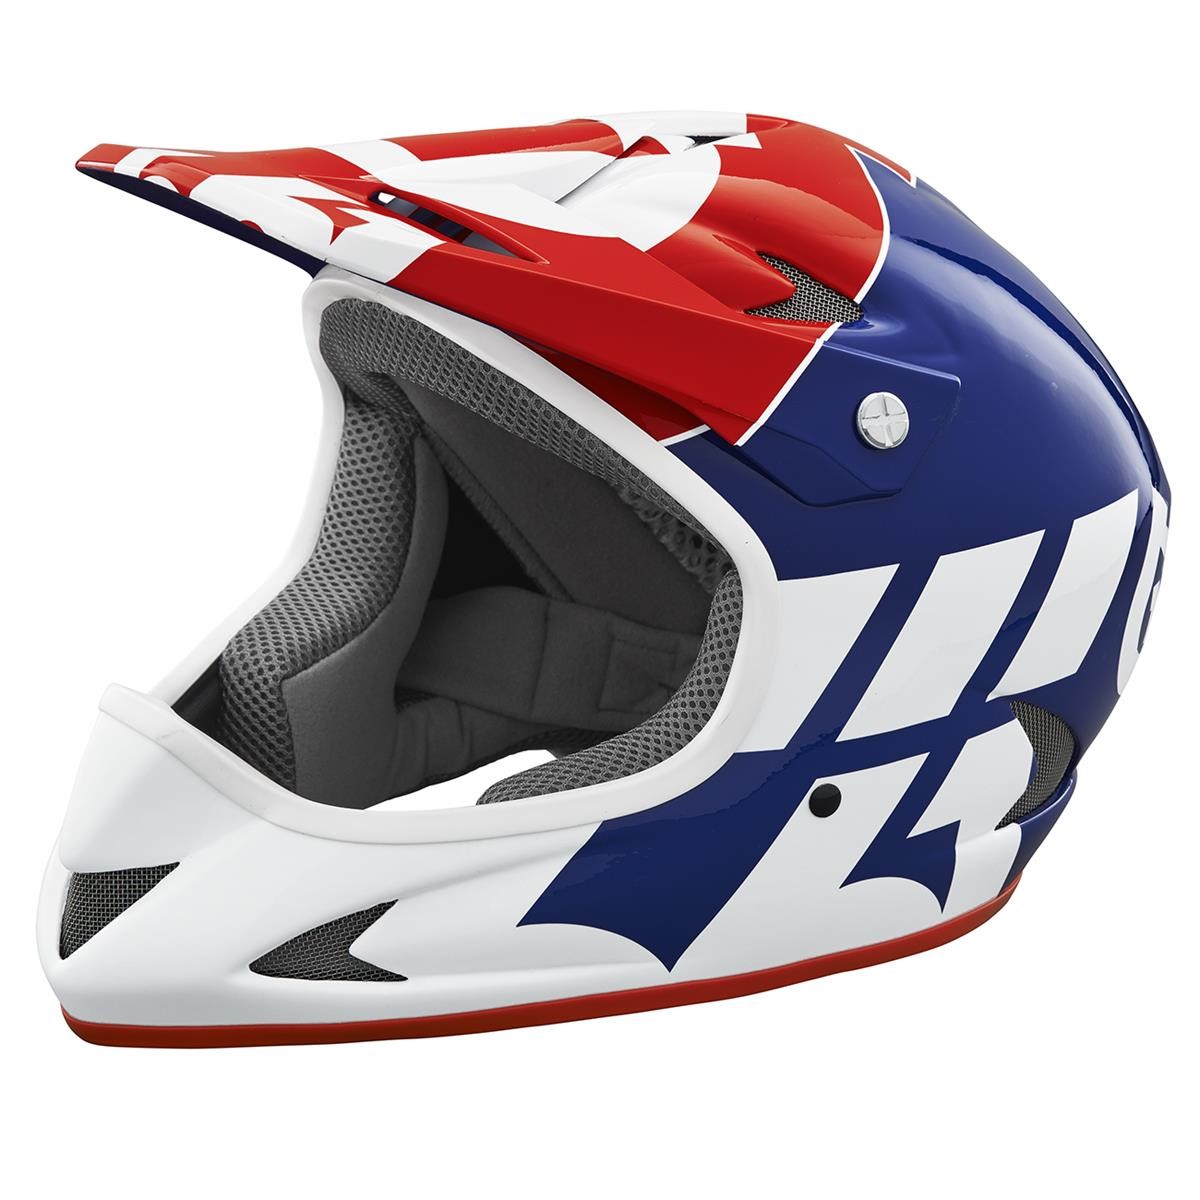 SixSixOne Downhill-MTB Helmet 661 Rage Navy Blue/White/Red